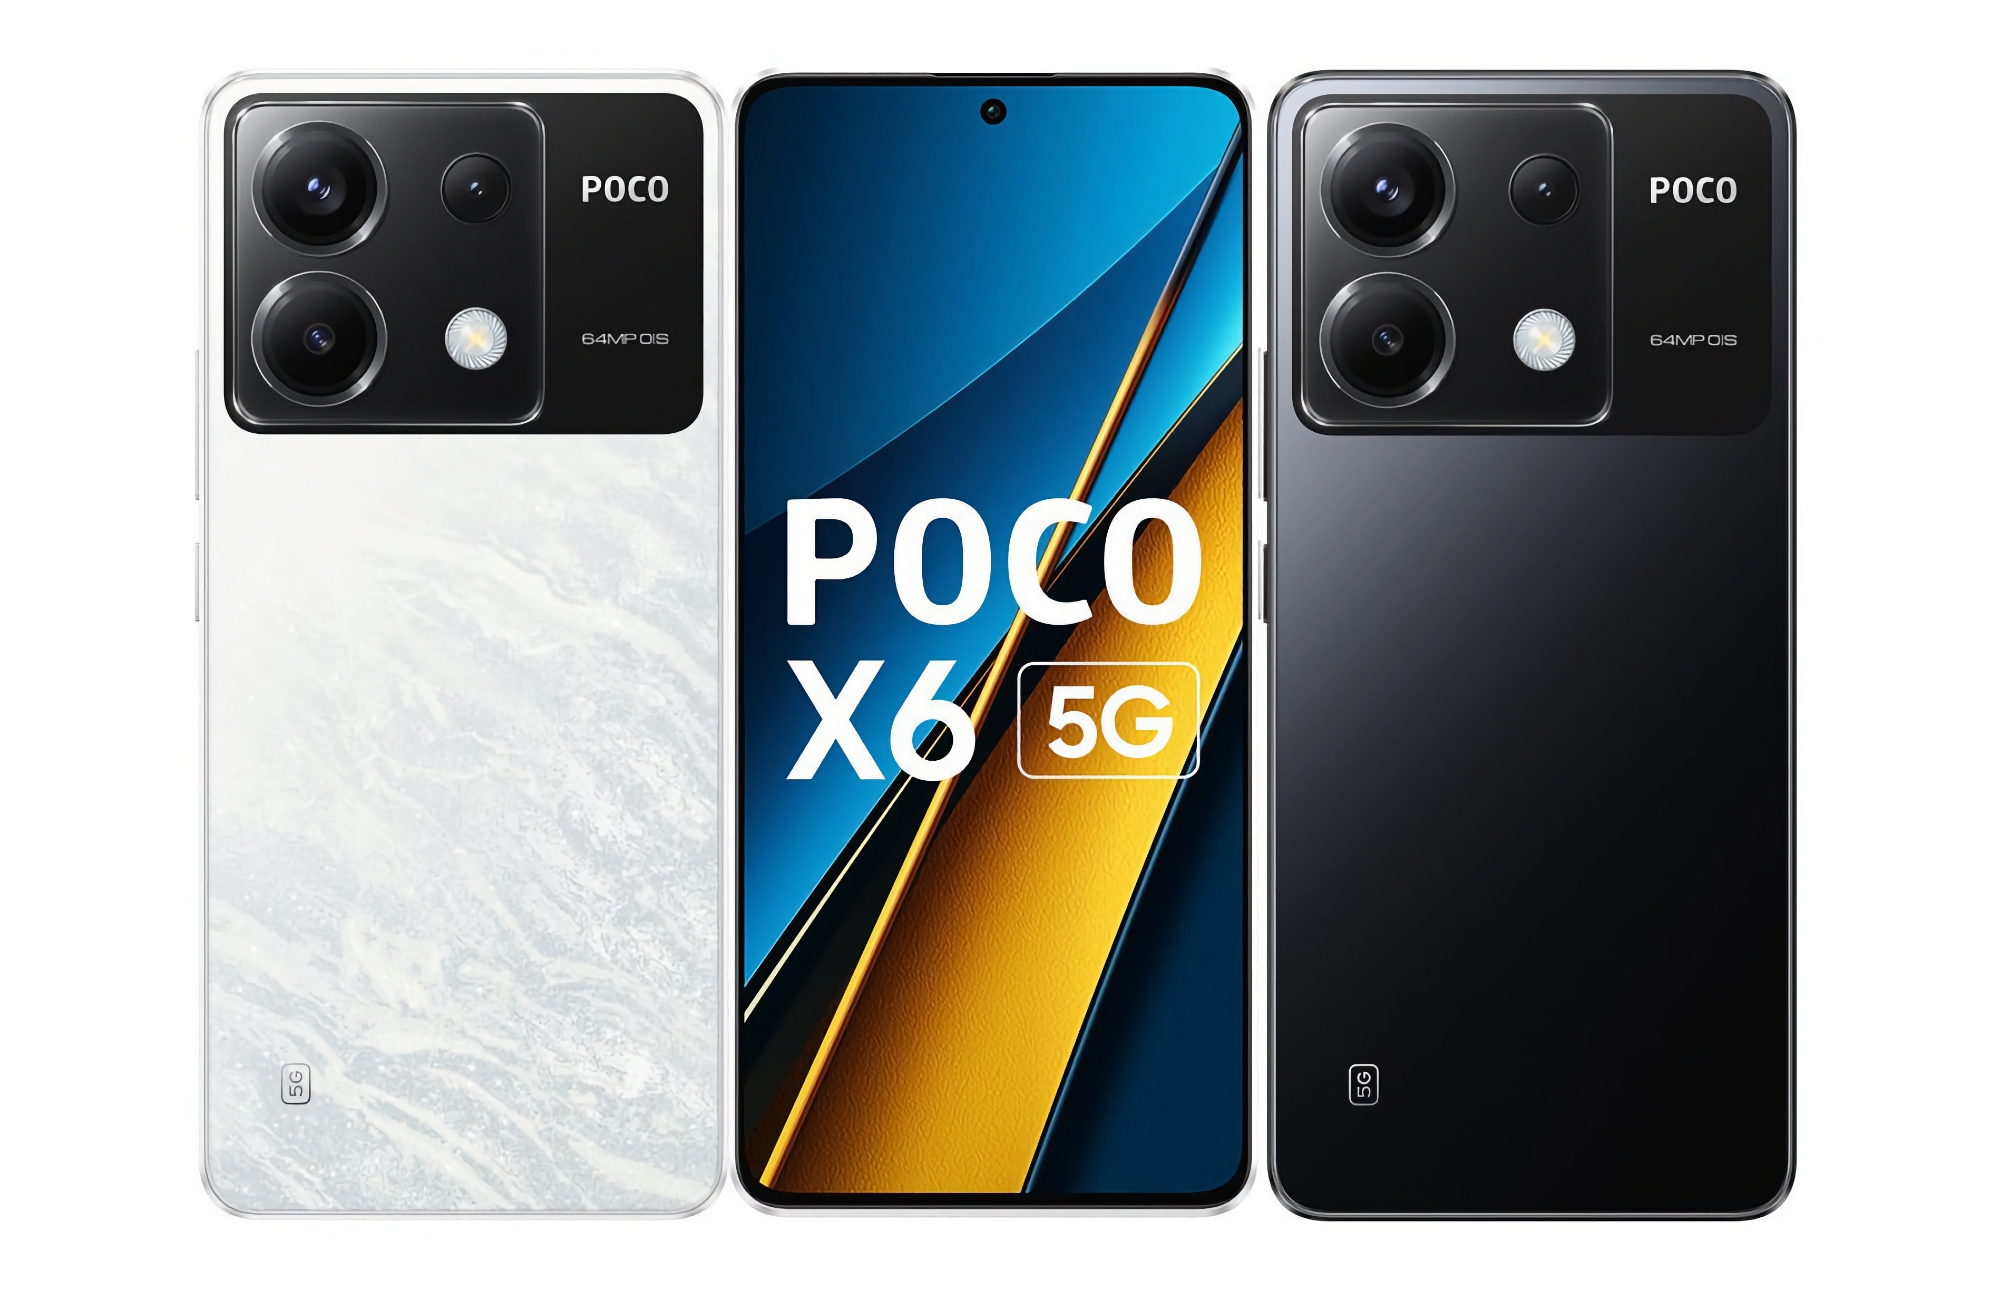 POCO X6 5G: simplified version of POCO X6 Pro with Snapdragon 7s Gen 2 chip